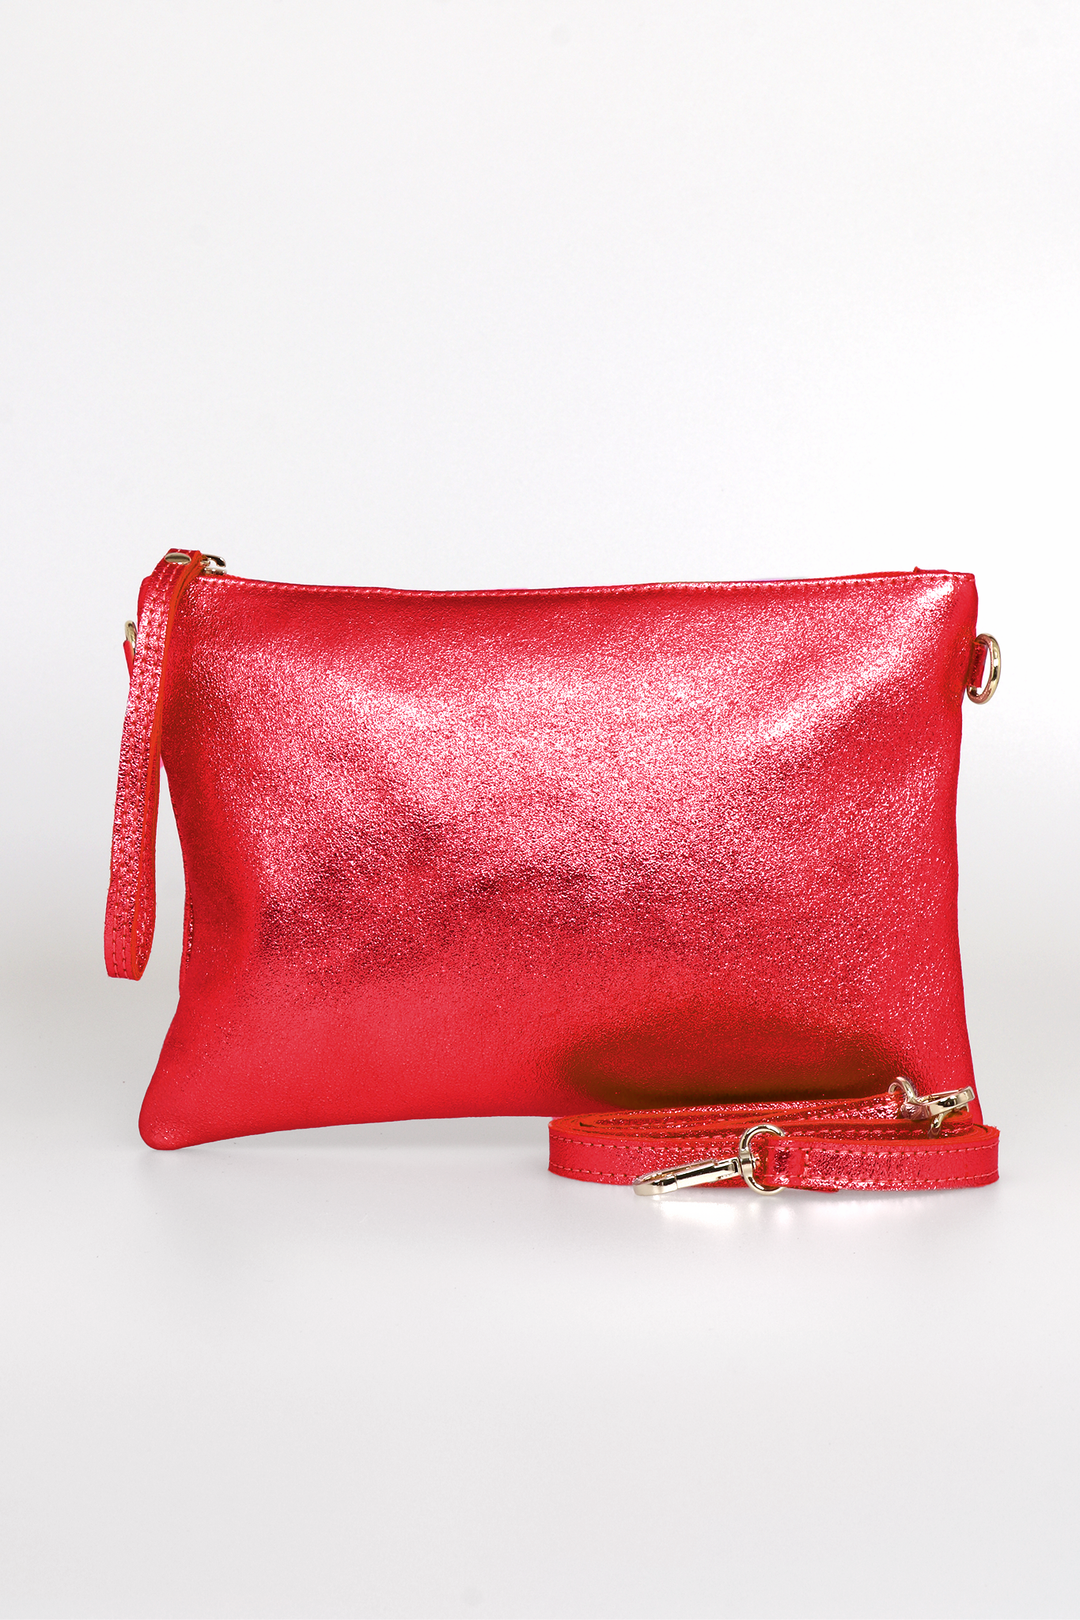 Metallic Scarlet Large Genuine Italian Leather Wristlet Clutch Bag